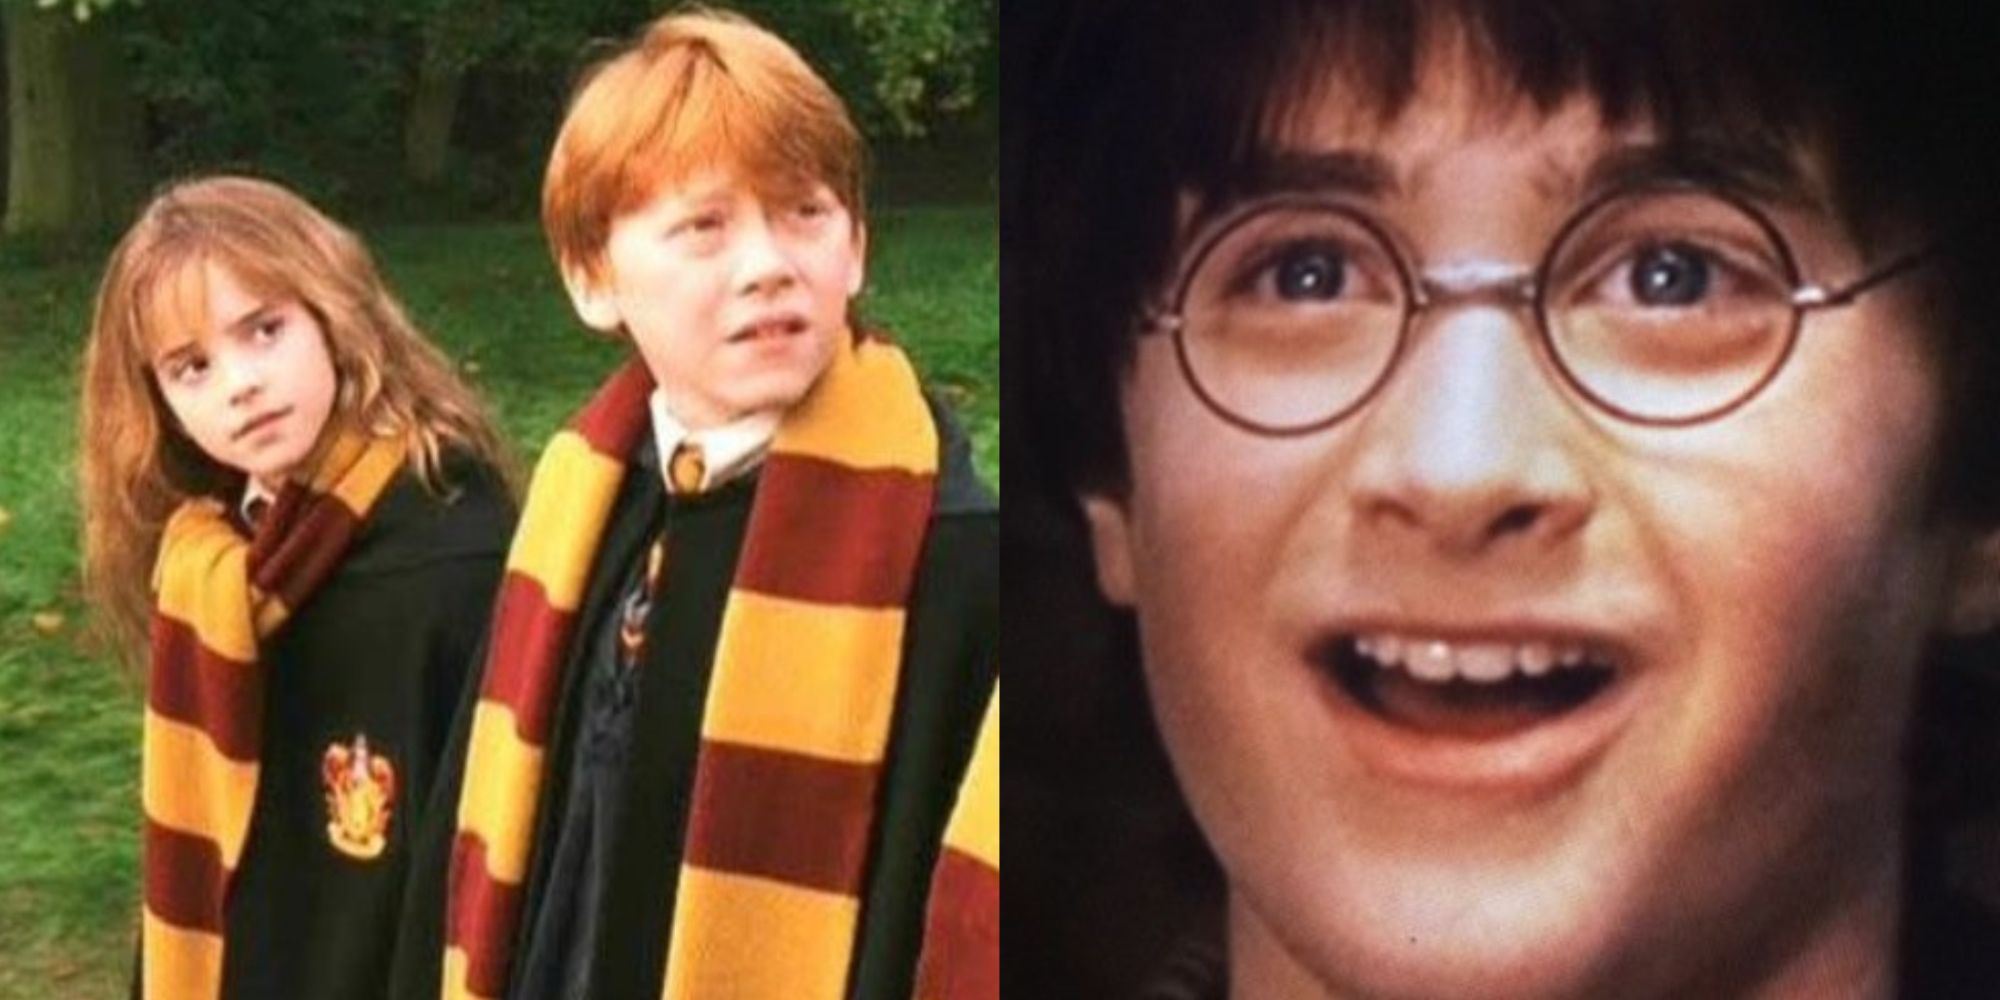 Harry Potter Meme 😂😂 Tags 🏷️ #funny #leprechaun #hp #hogwarts